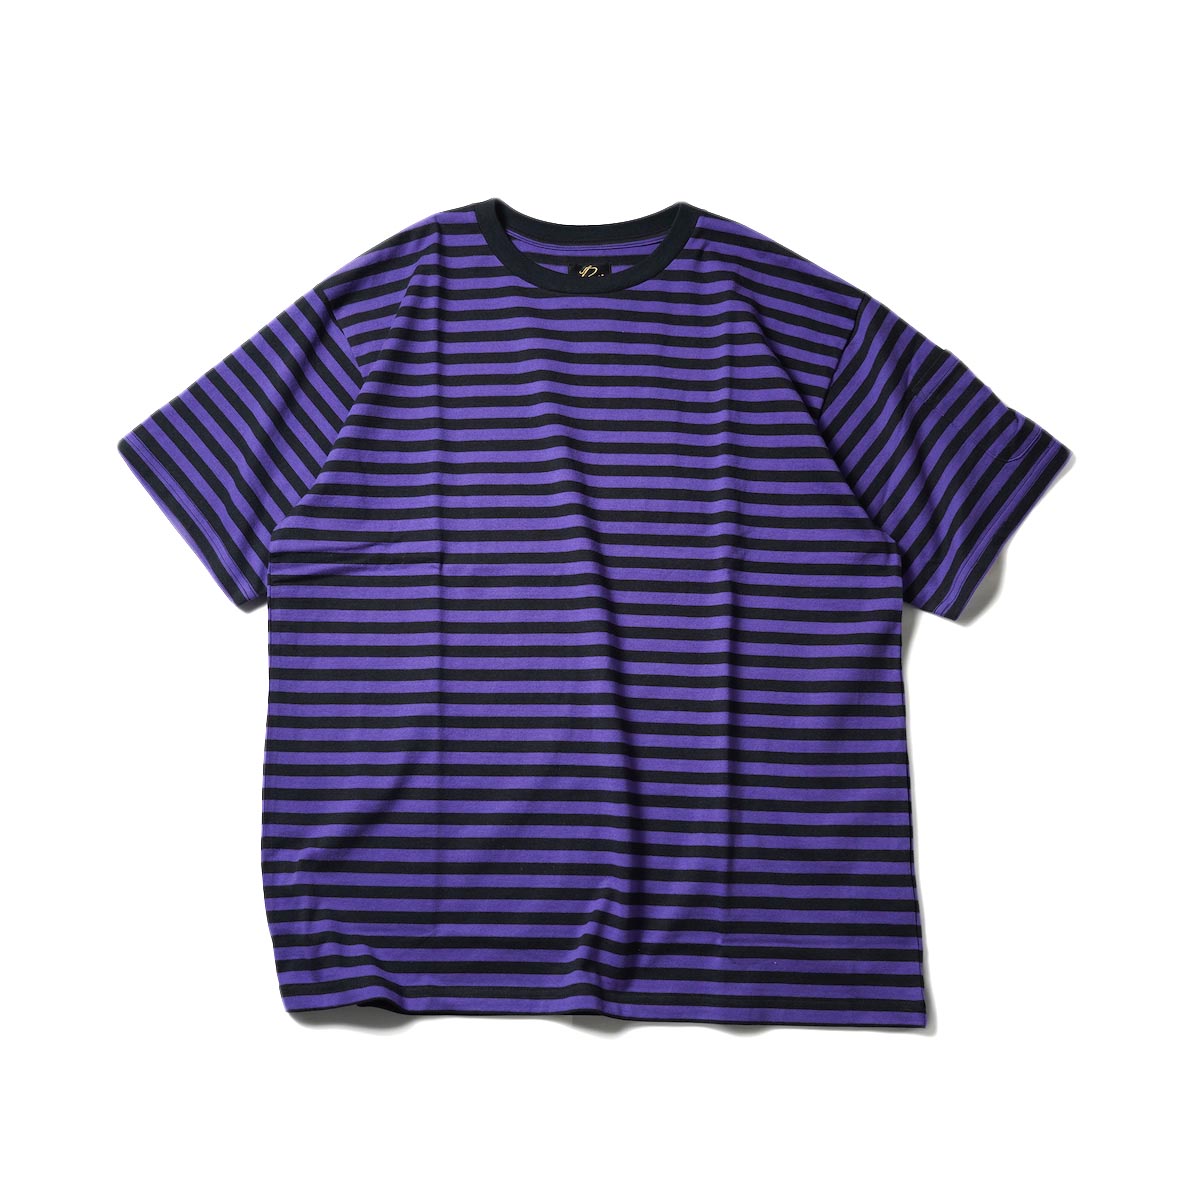 Needles / S/S Crew Neck Tee - Cotton Stripe Jersey (Black/Purple)正面